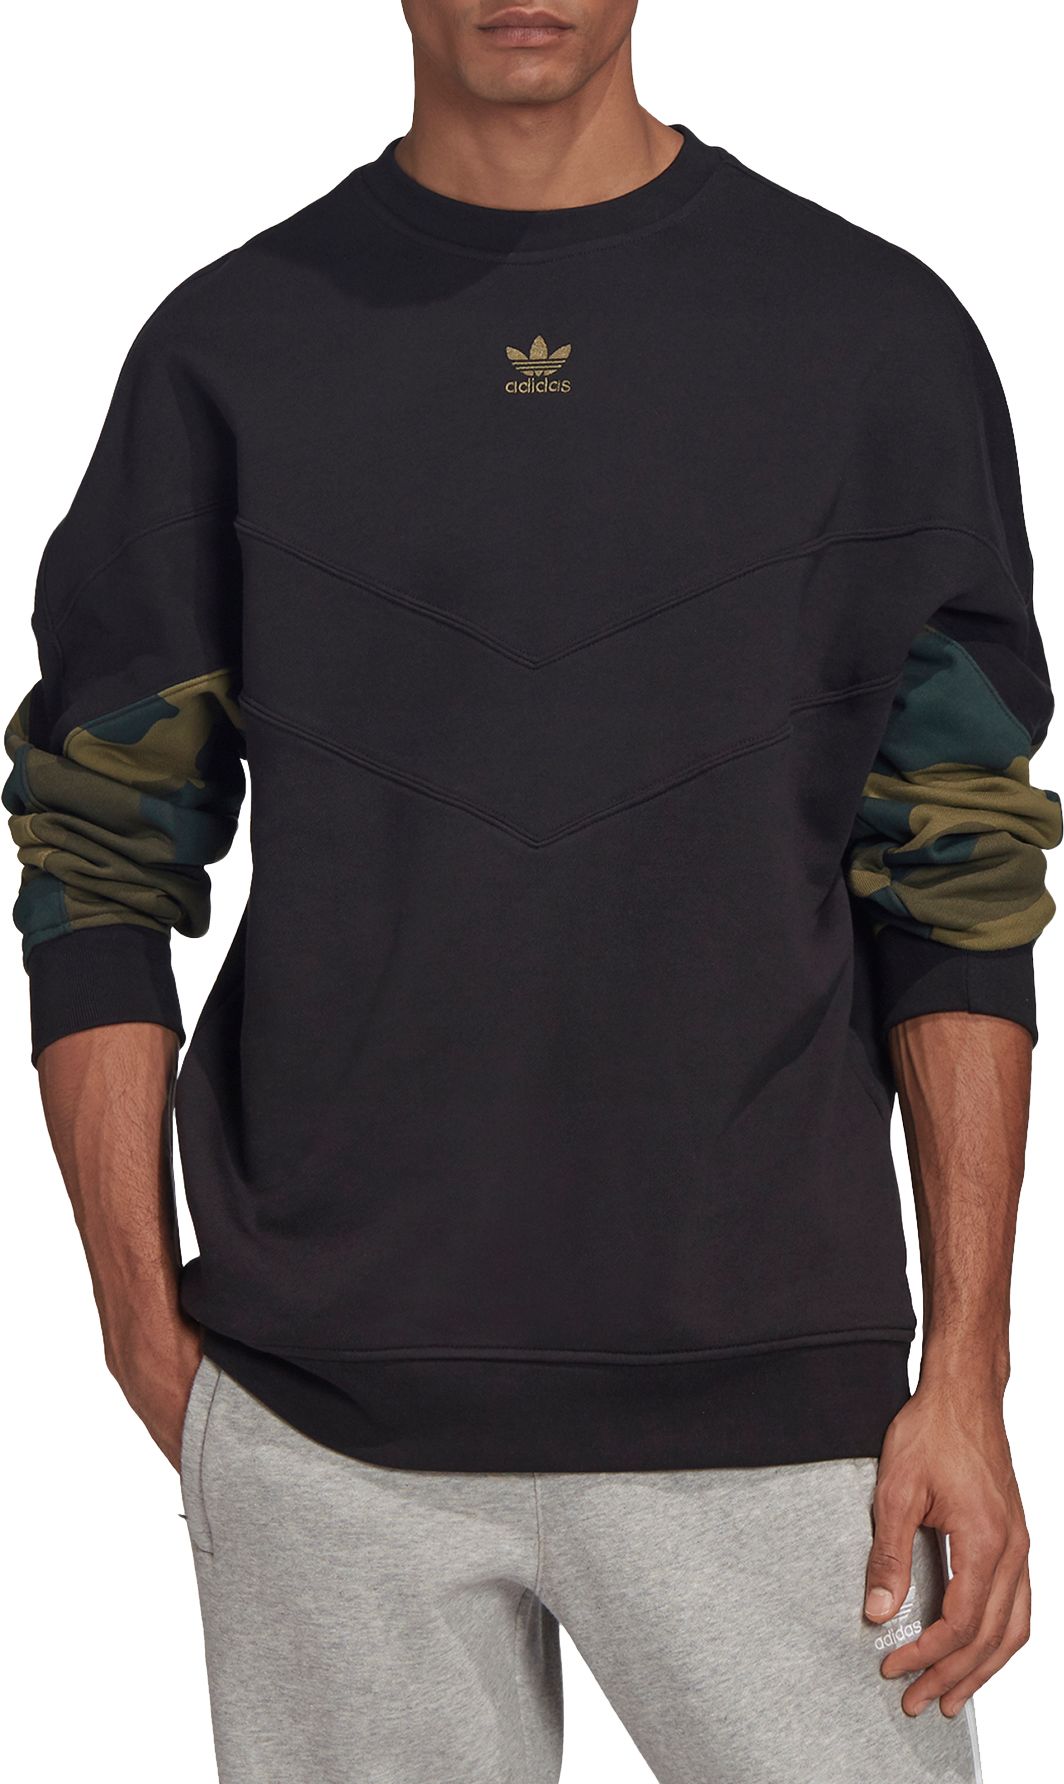 camouflage sweatshirt adidas